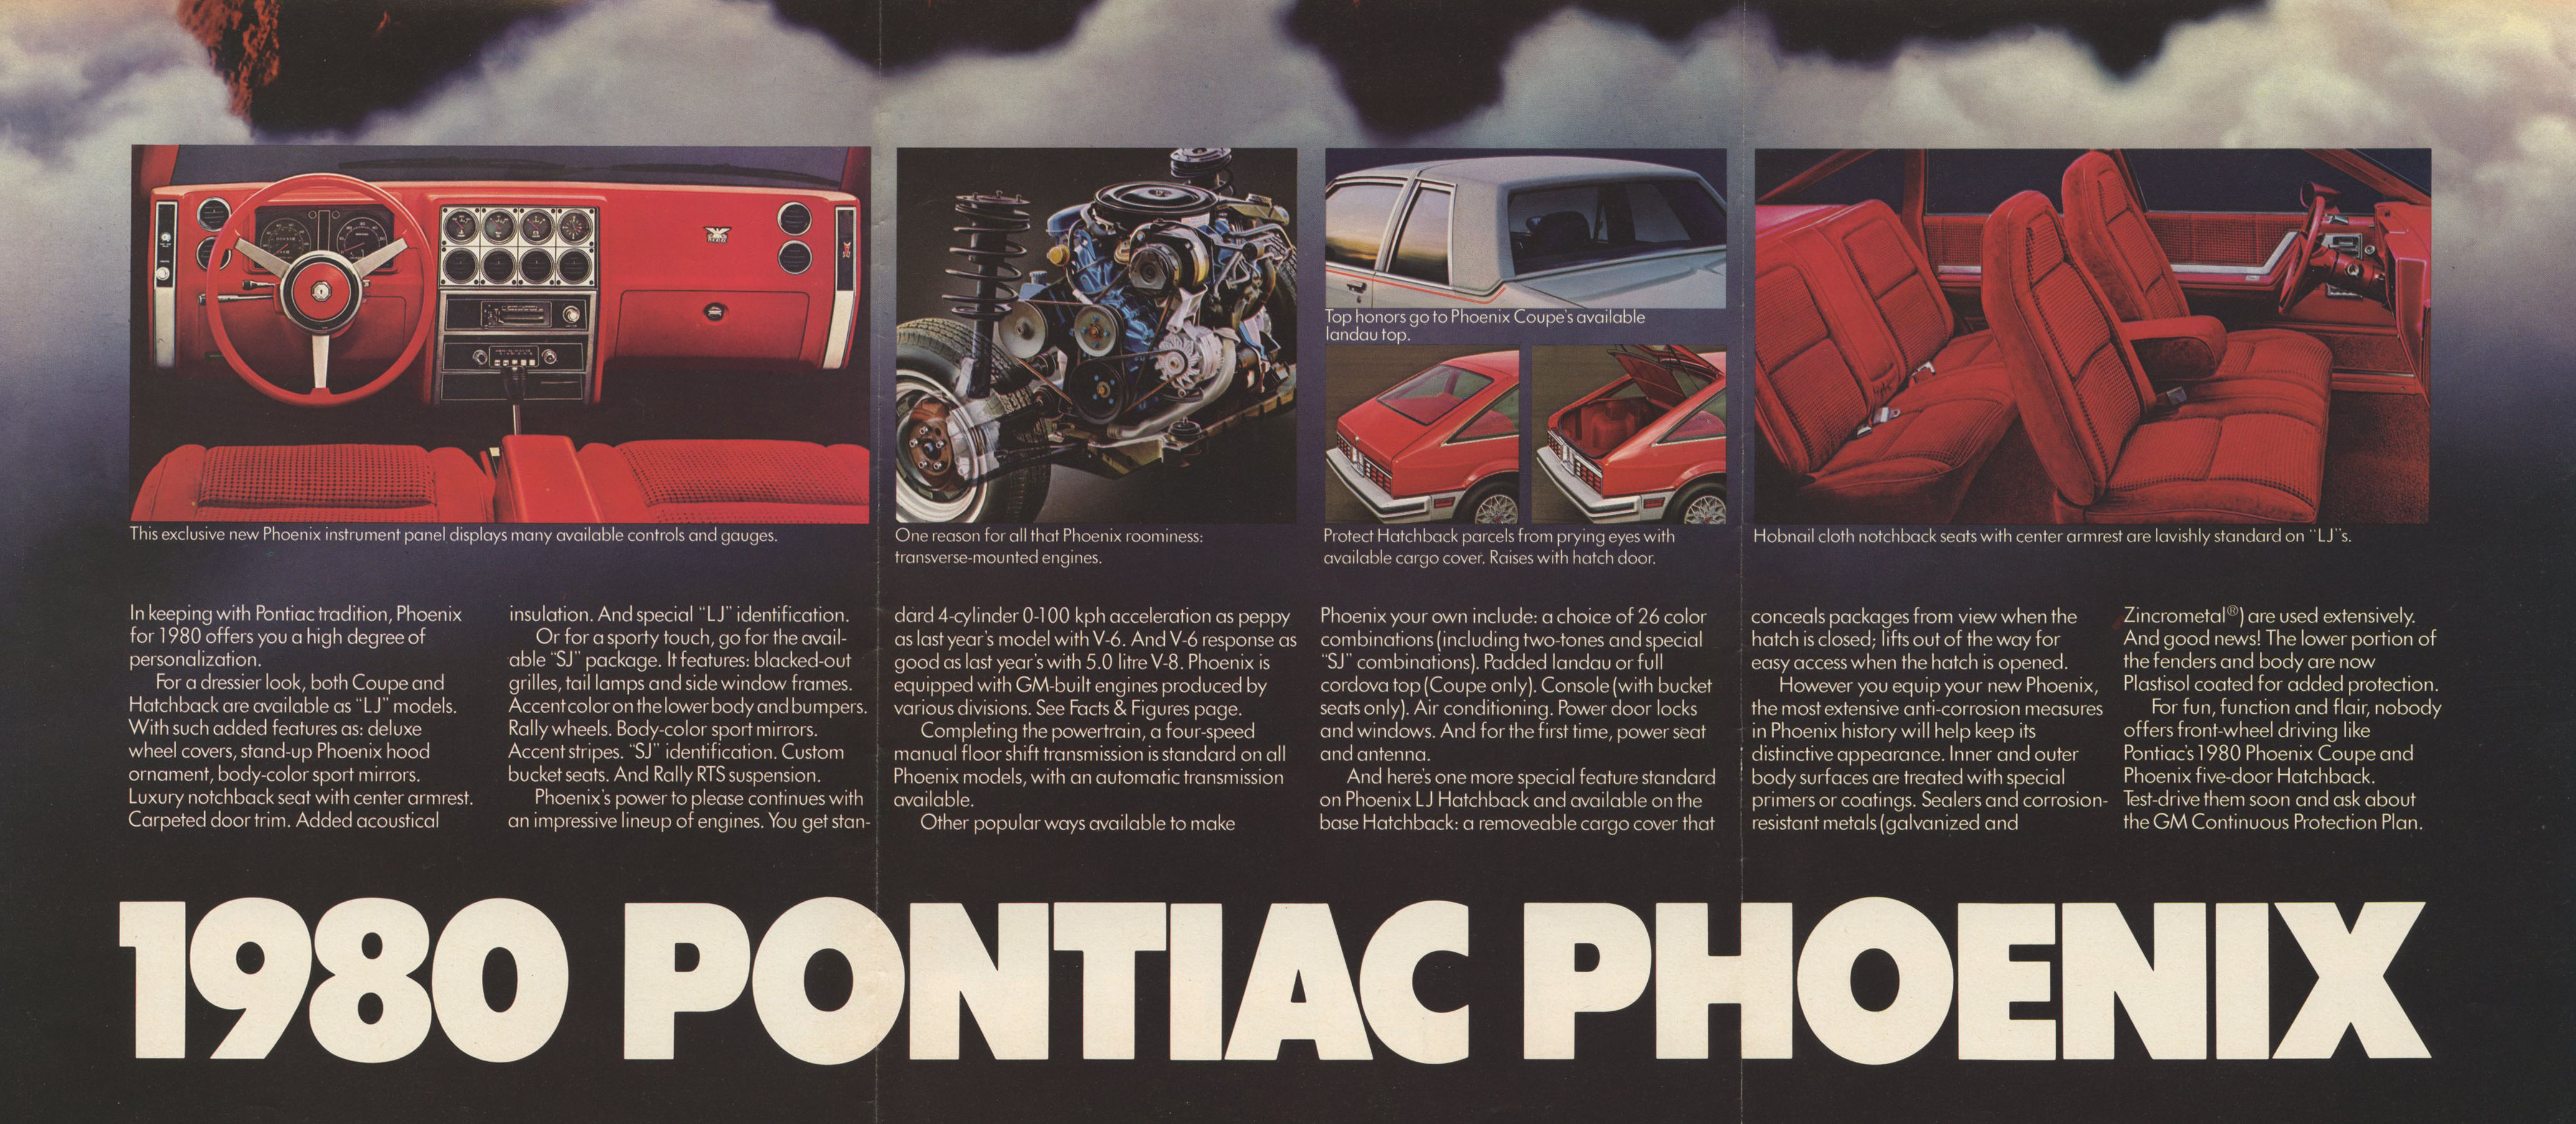 1980_Pontiac_Phoenix_Cdn-09-10-11